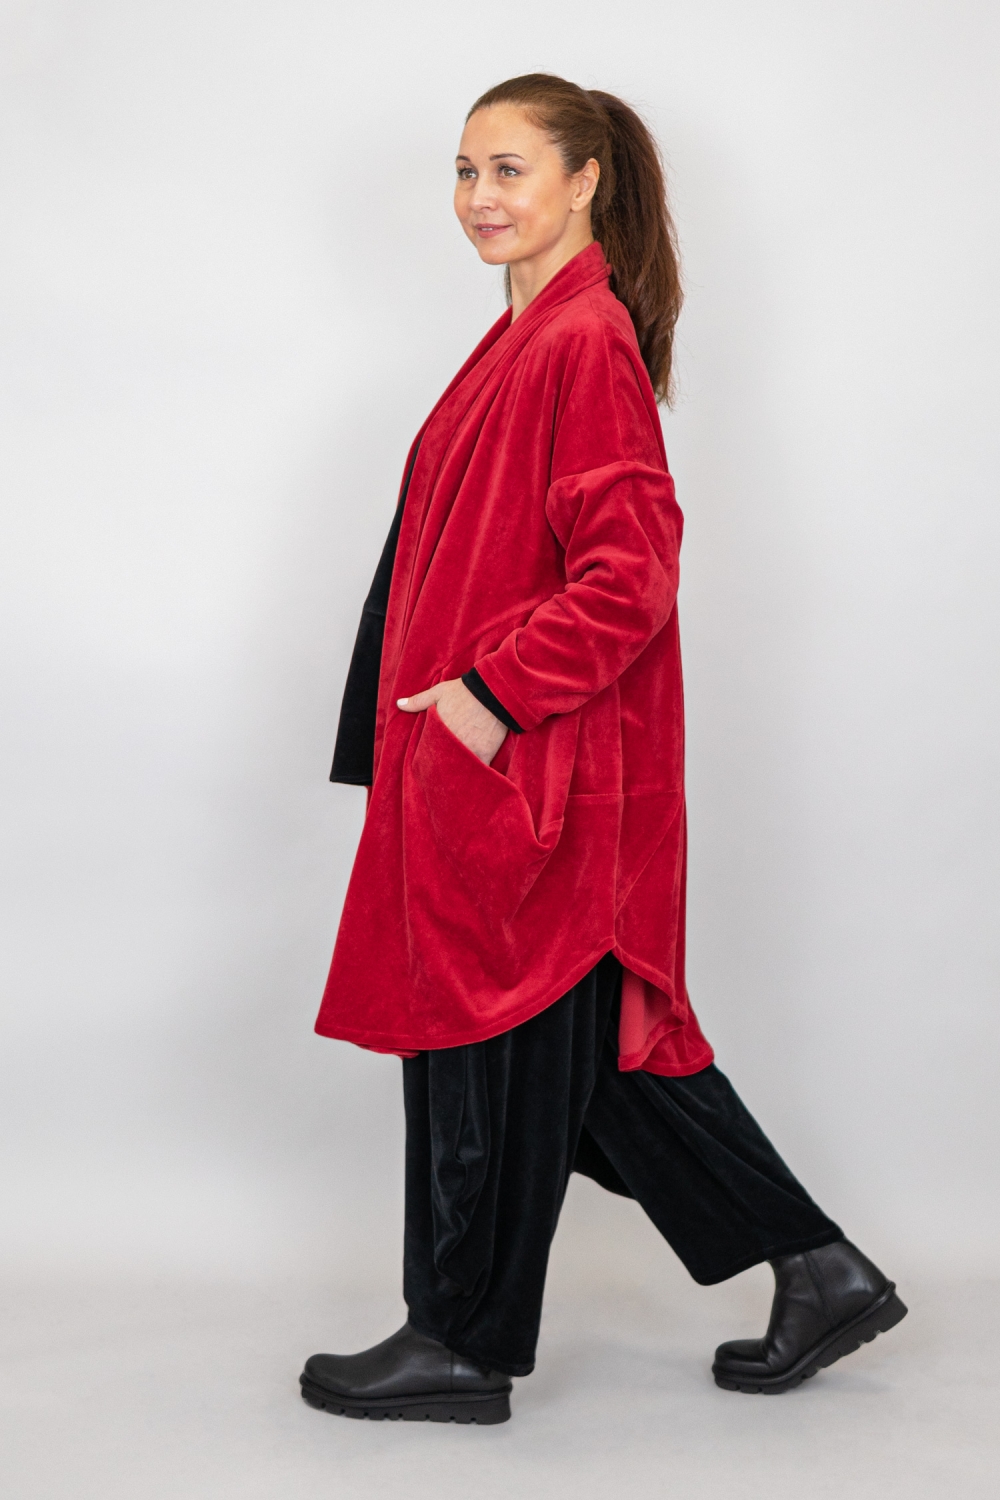 Sassy Jacke in Tulpenform aus Nicky Velours Stoff in rot